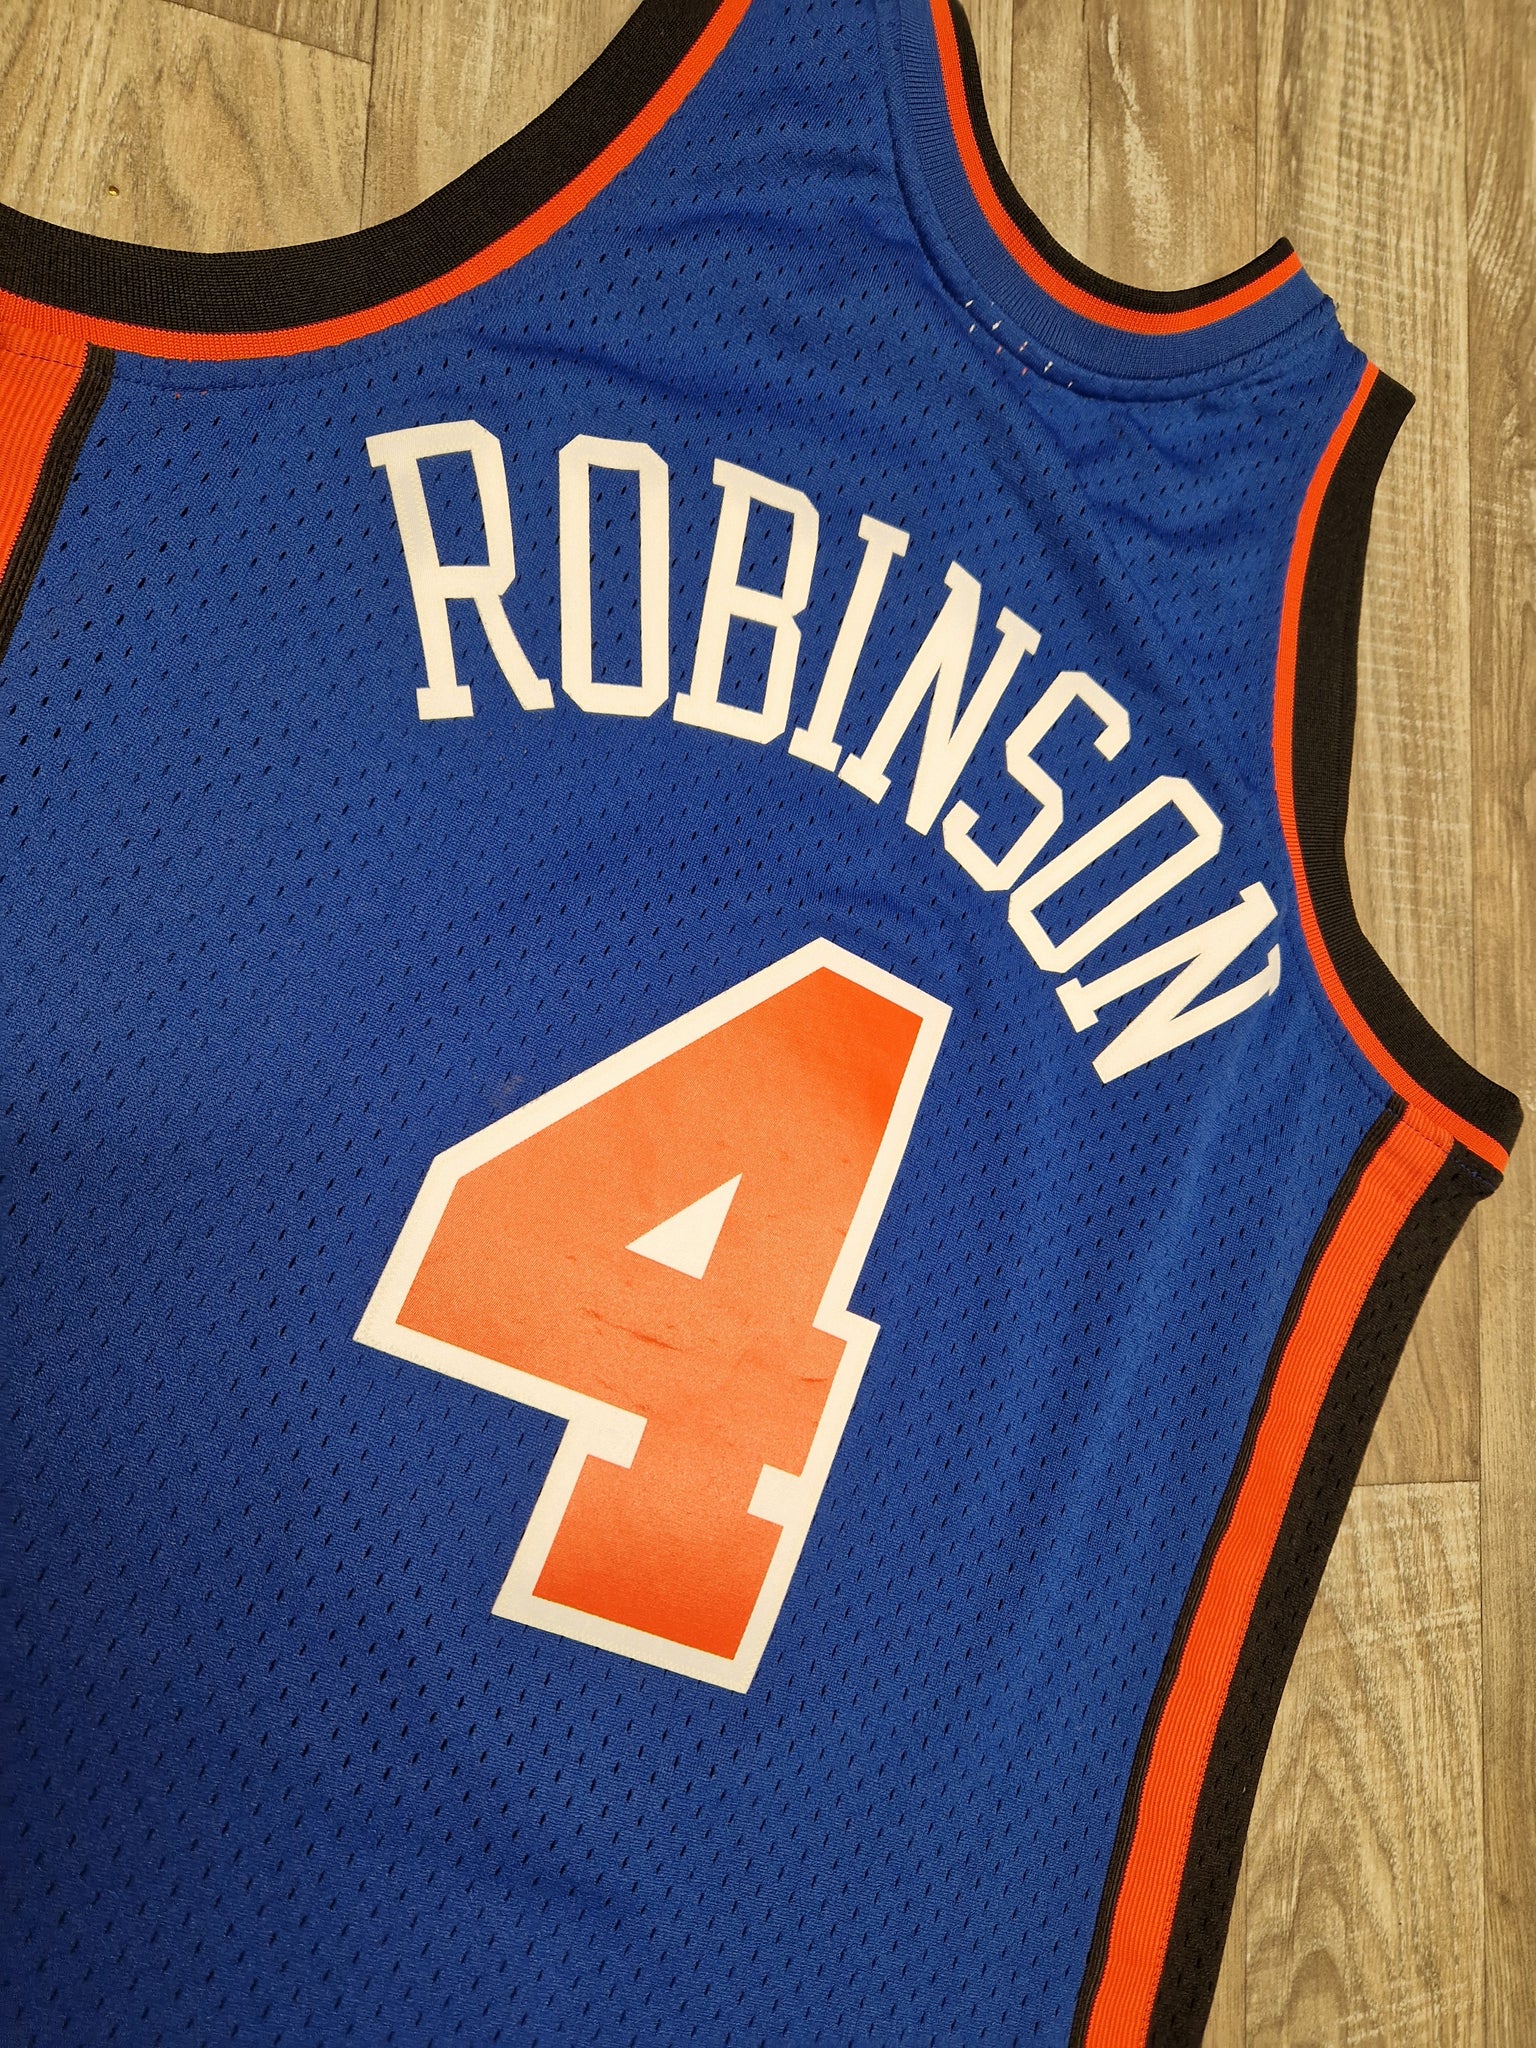 🏀 Nate Robinson New York Knicks Jersey Size Medium – The Throwback Store 🏀